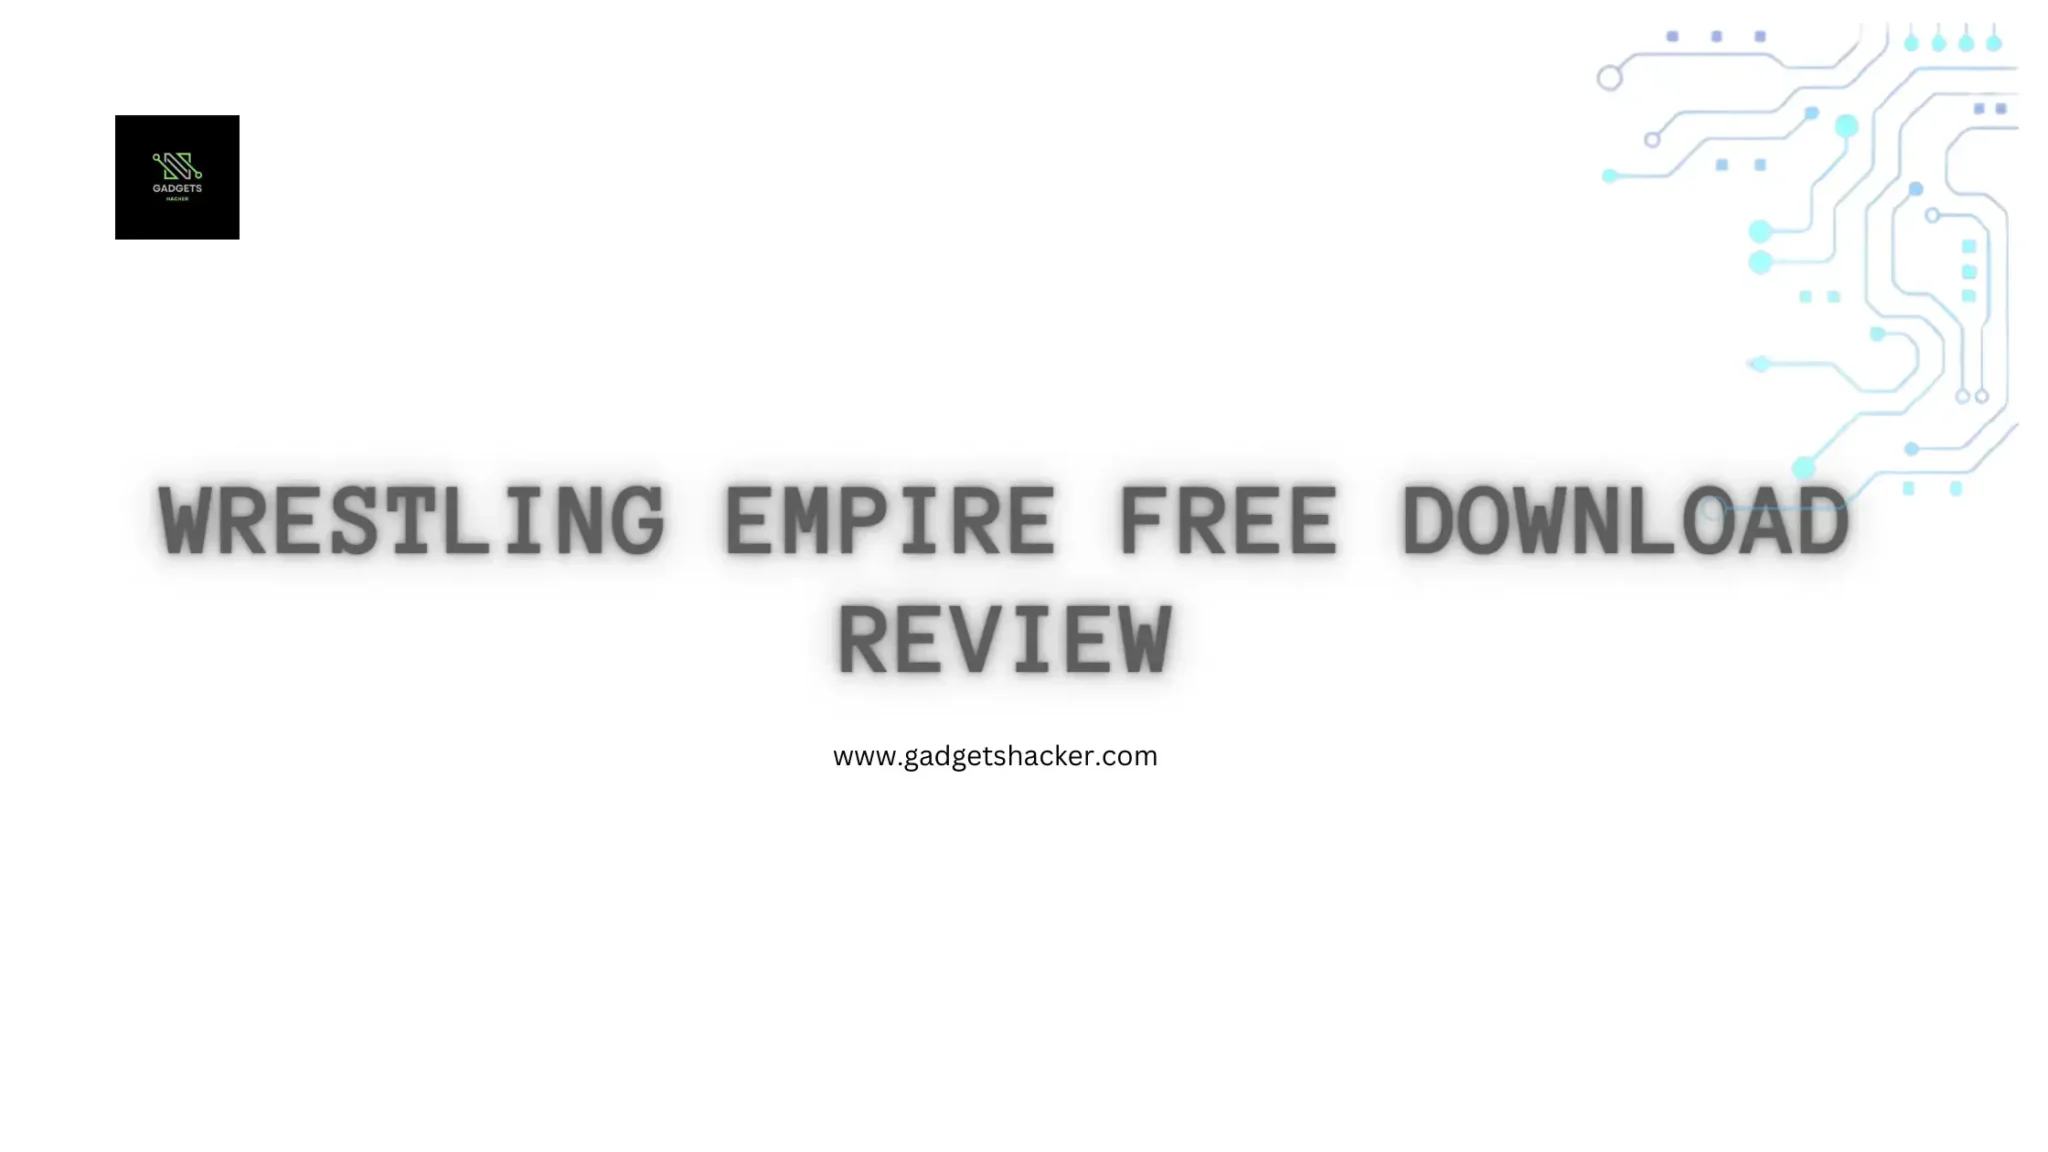 Wrestling Empire Free Download